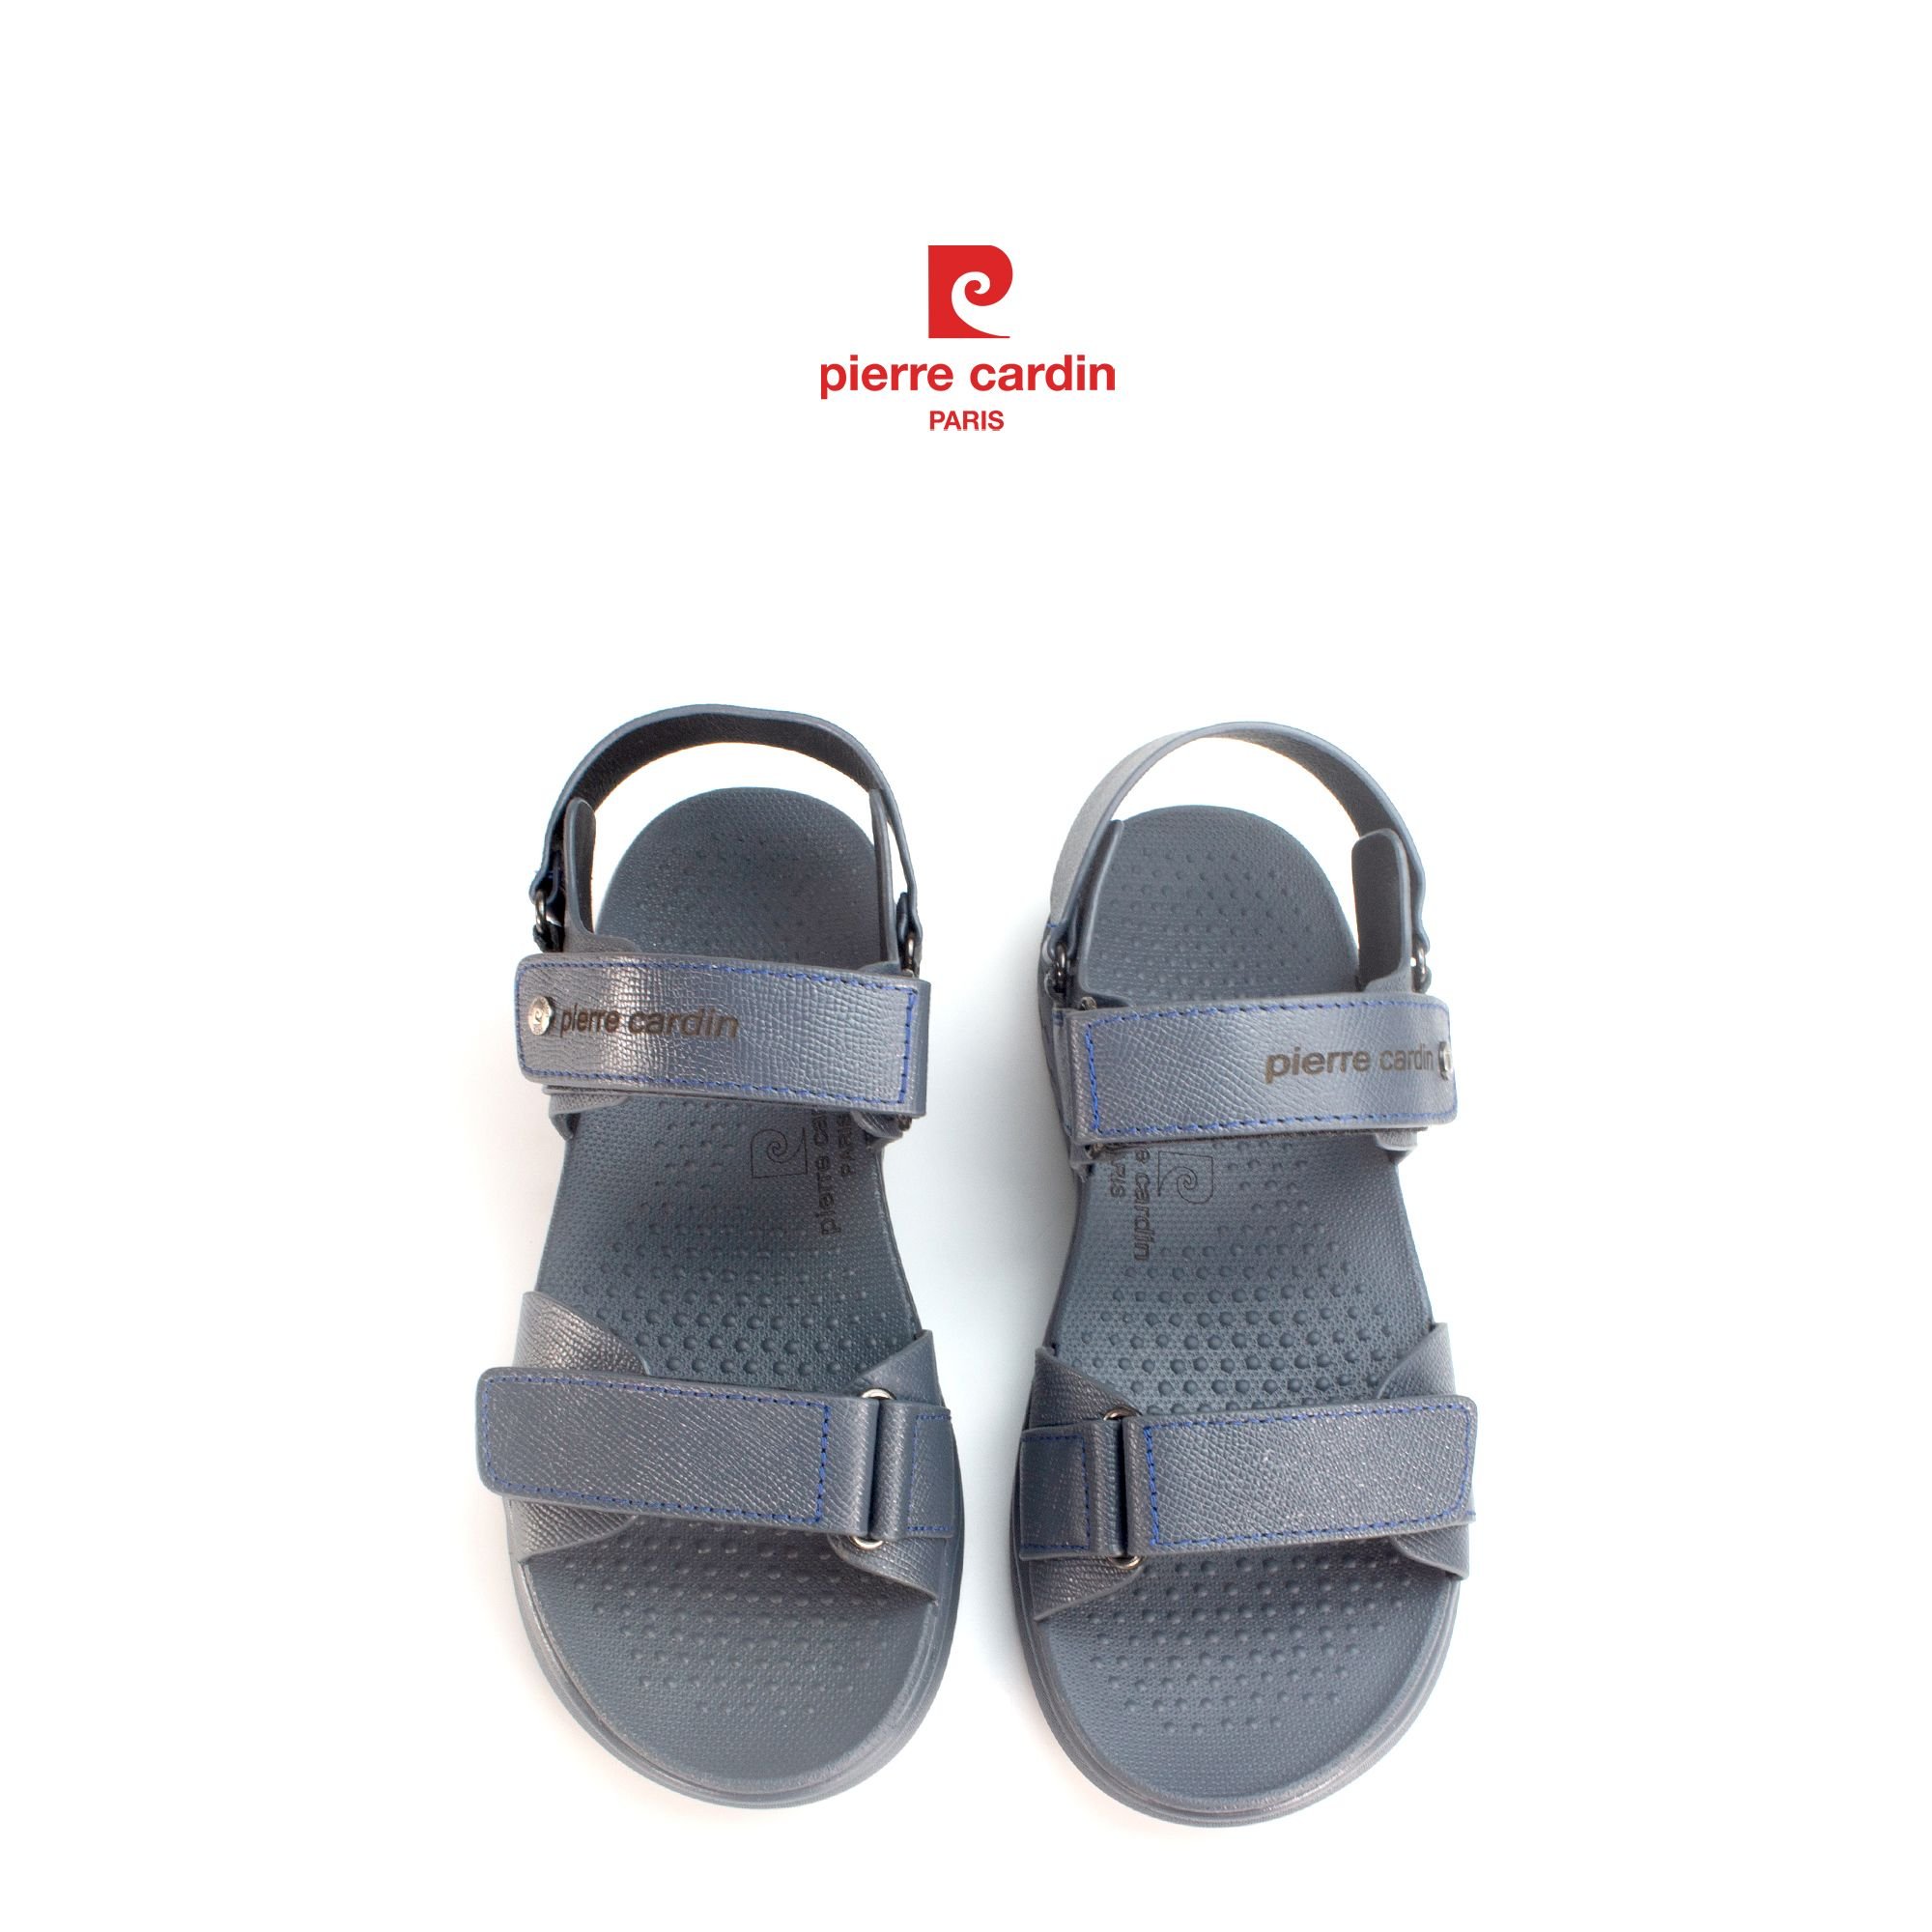 Pierre Cardin Paris Vietnam: Deluxe Sandals - PCMFWLG 153 (BLACK)